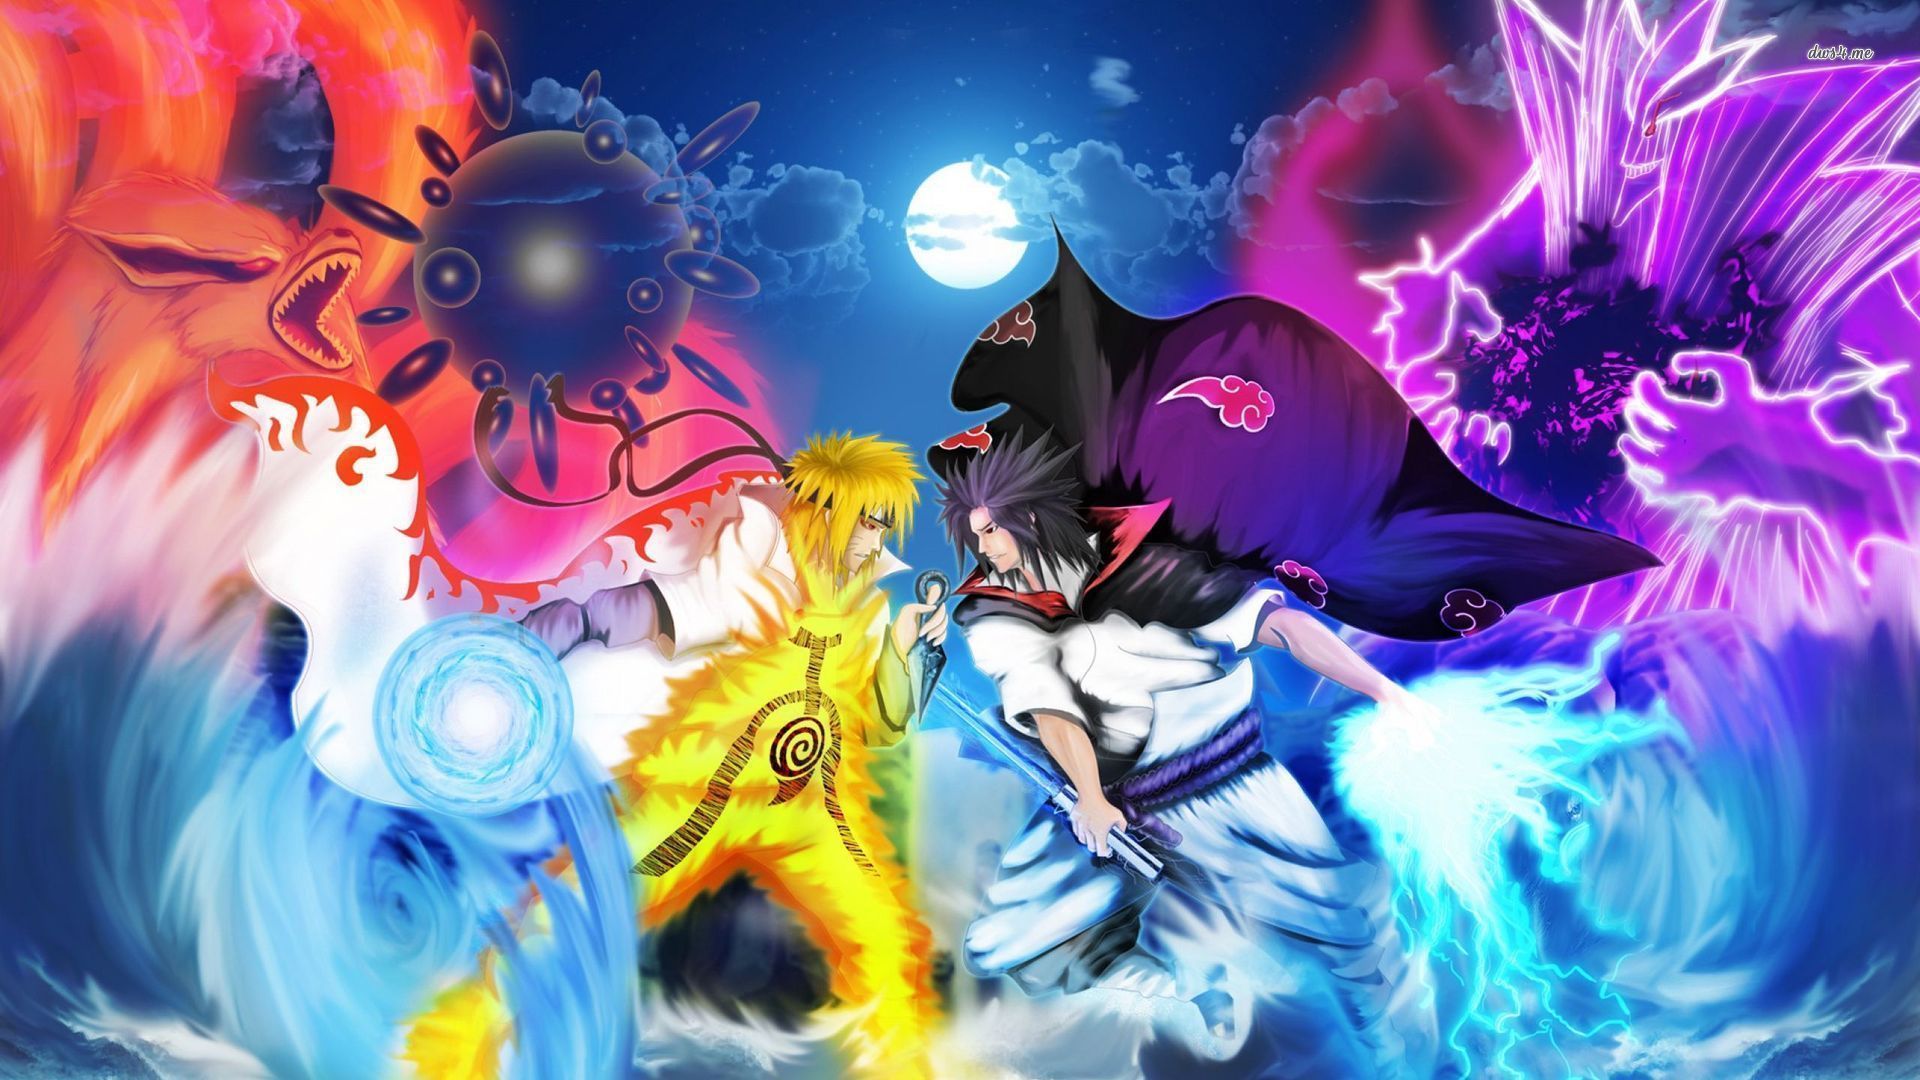 Naruto vs Sasuke wallpaper wallpaper